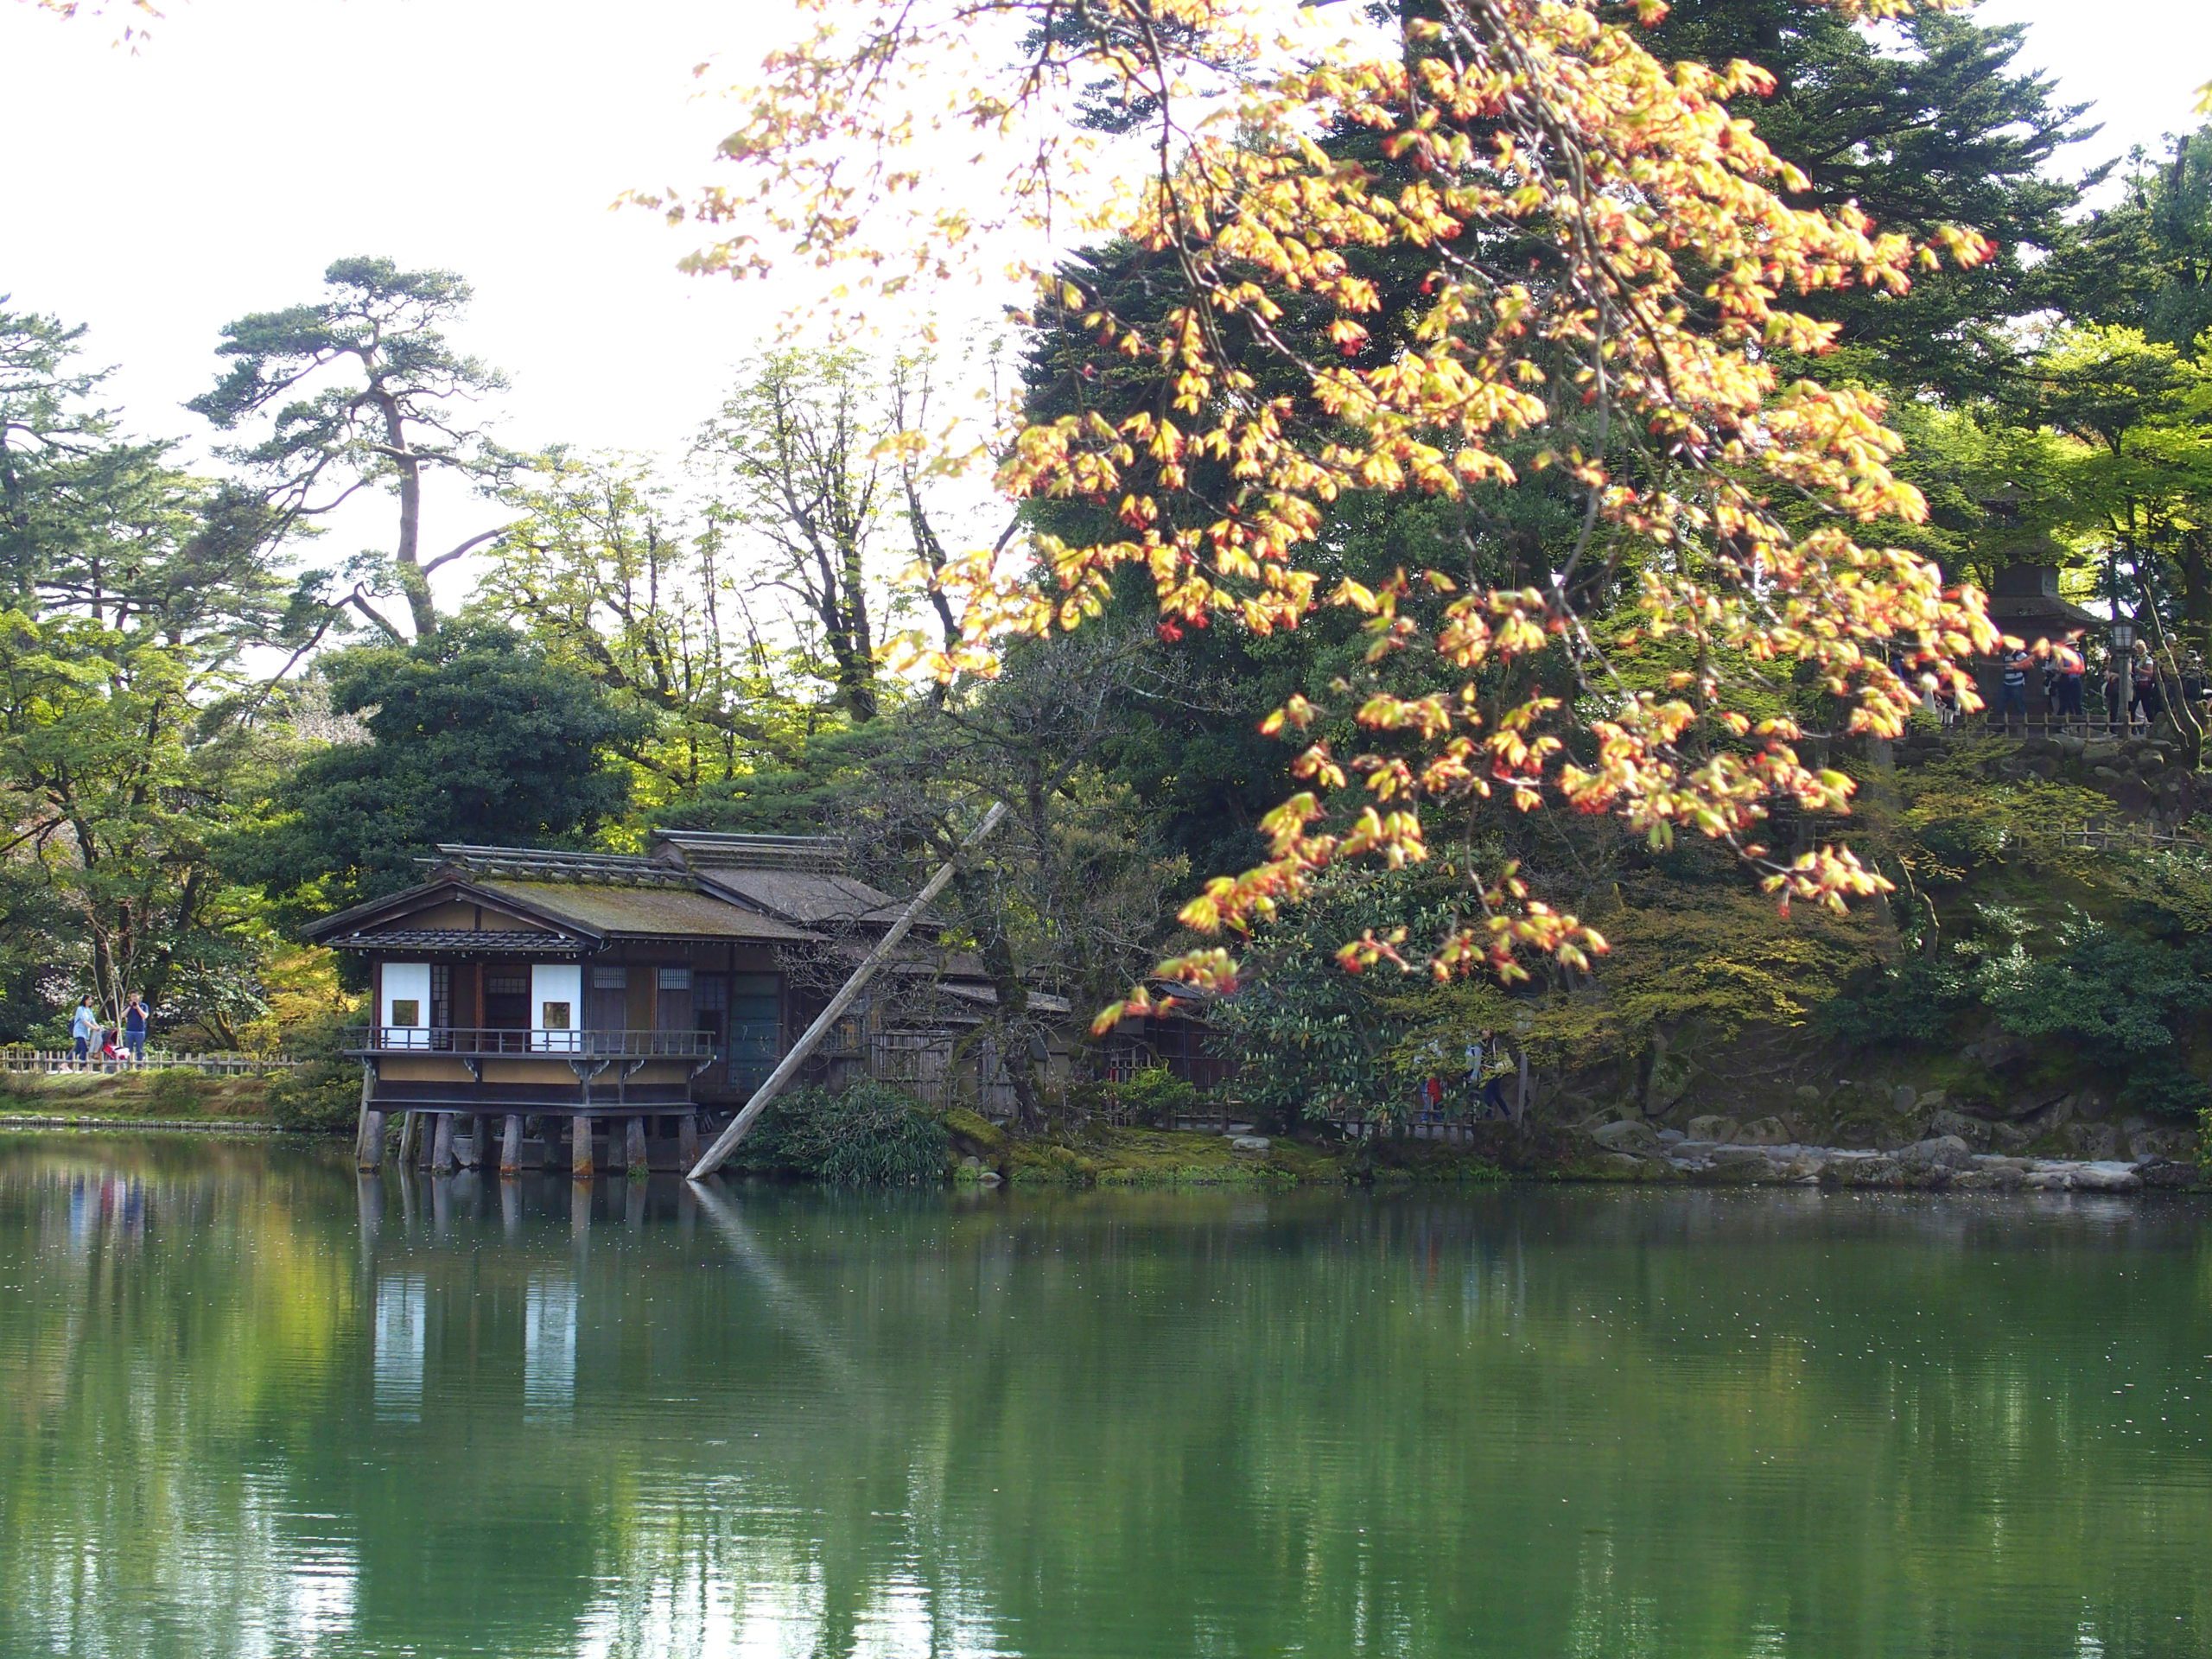 Maison de thé sur l'étang jardin Kenrokuen Kanazawa Japon